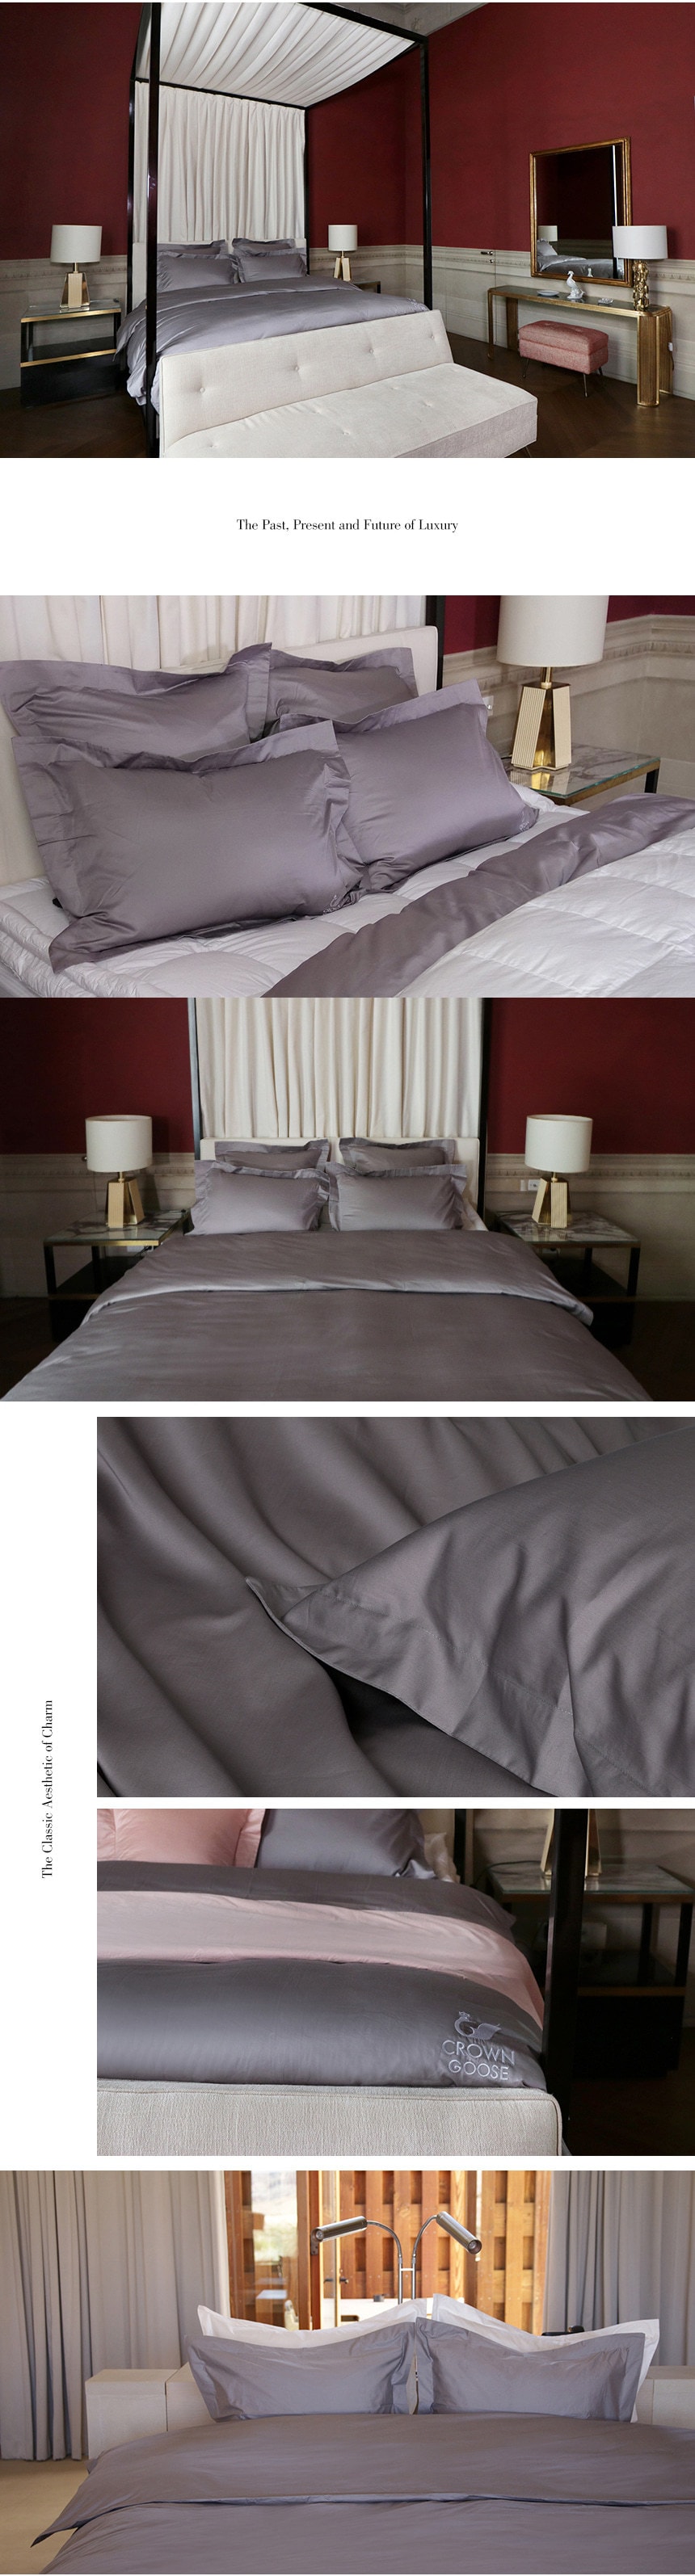 Luxurious Duvet Cover Set Premium 100% Cotton 100S (500 TC) - Sopor Collection #Gray Queen Size